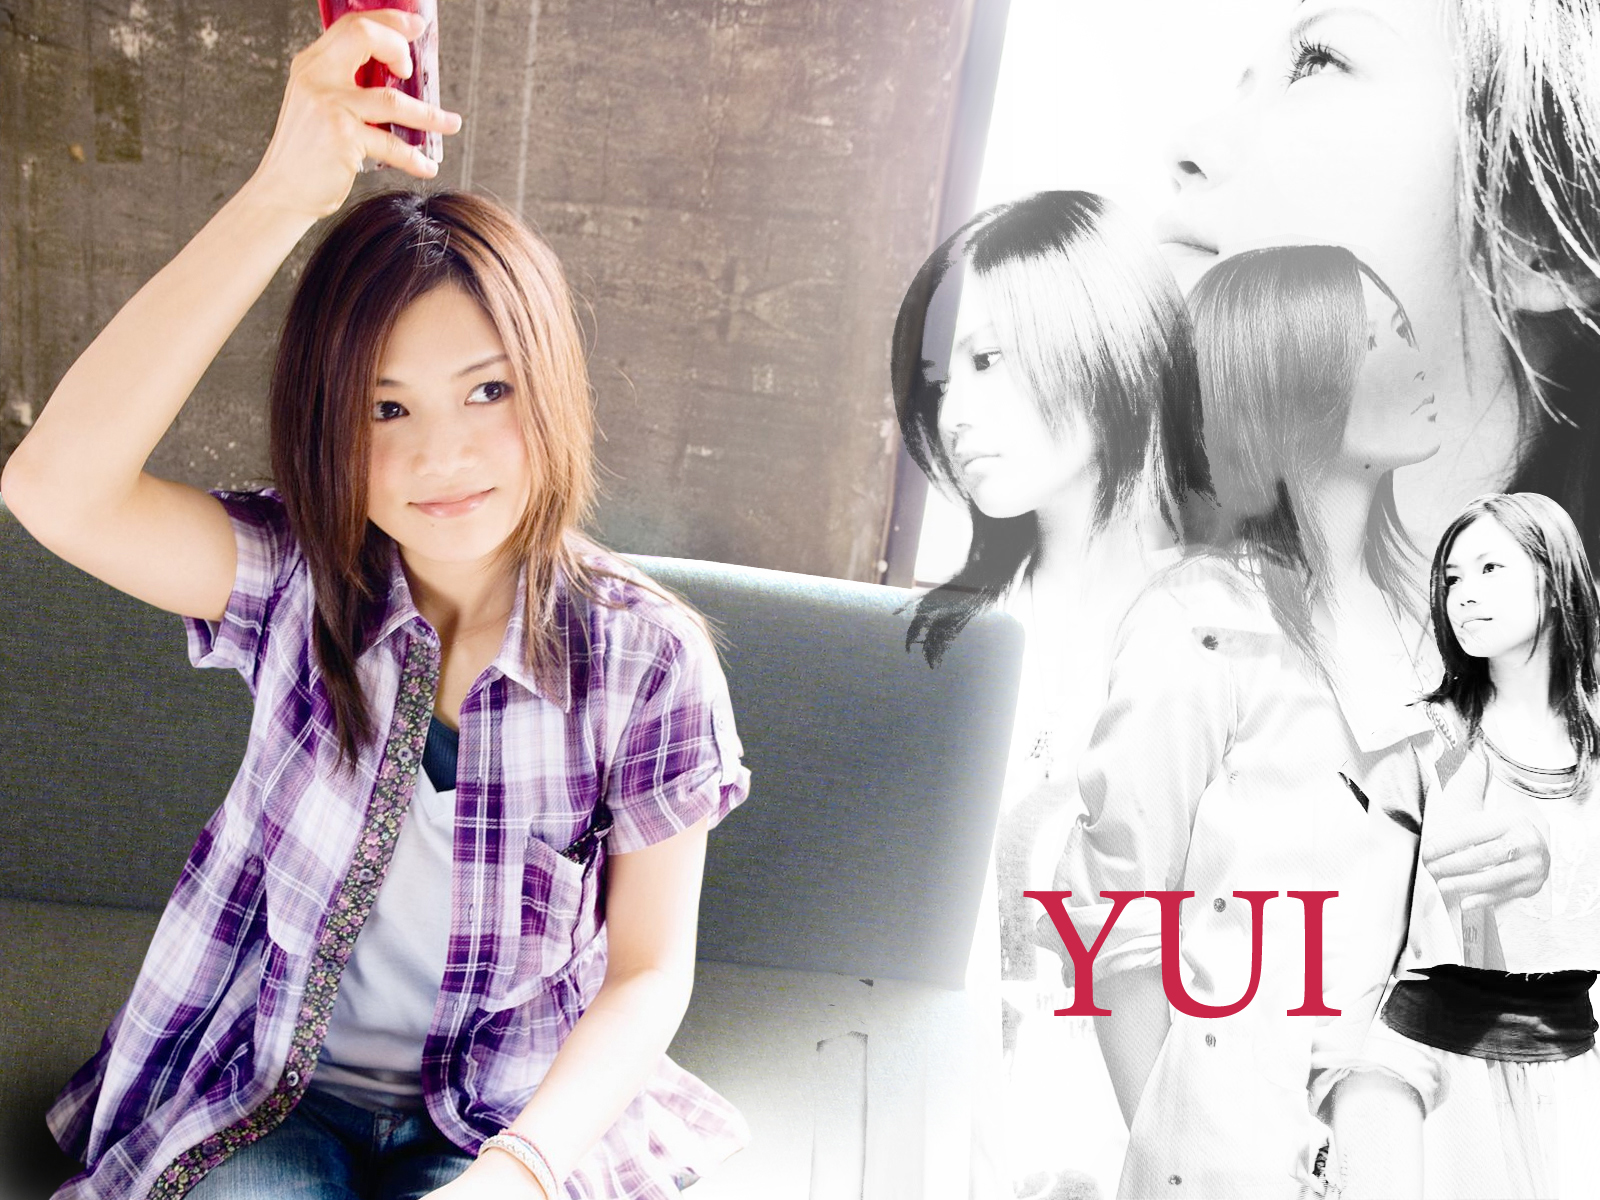 Unofficial Yui Wallpaper 67 □1600×1200 Px - Yui 壁紙 , HD Wallpaper & Backgrounds